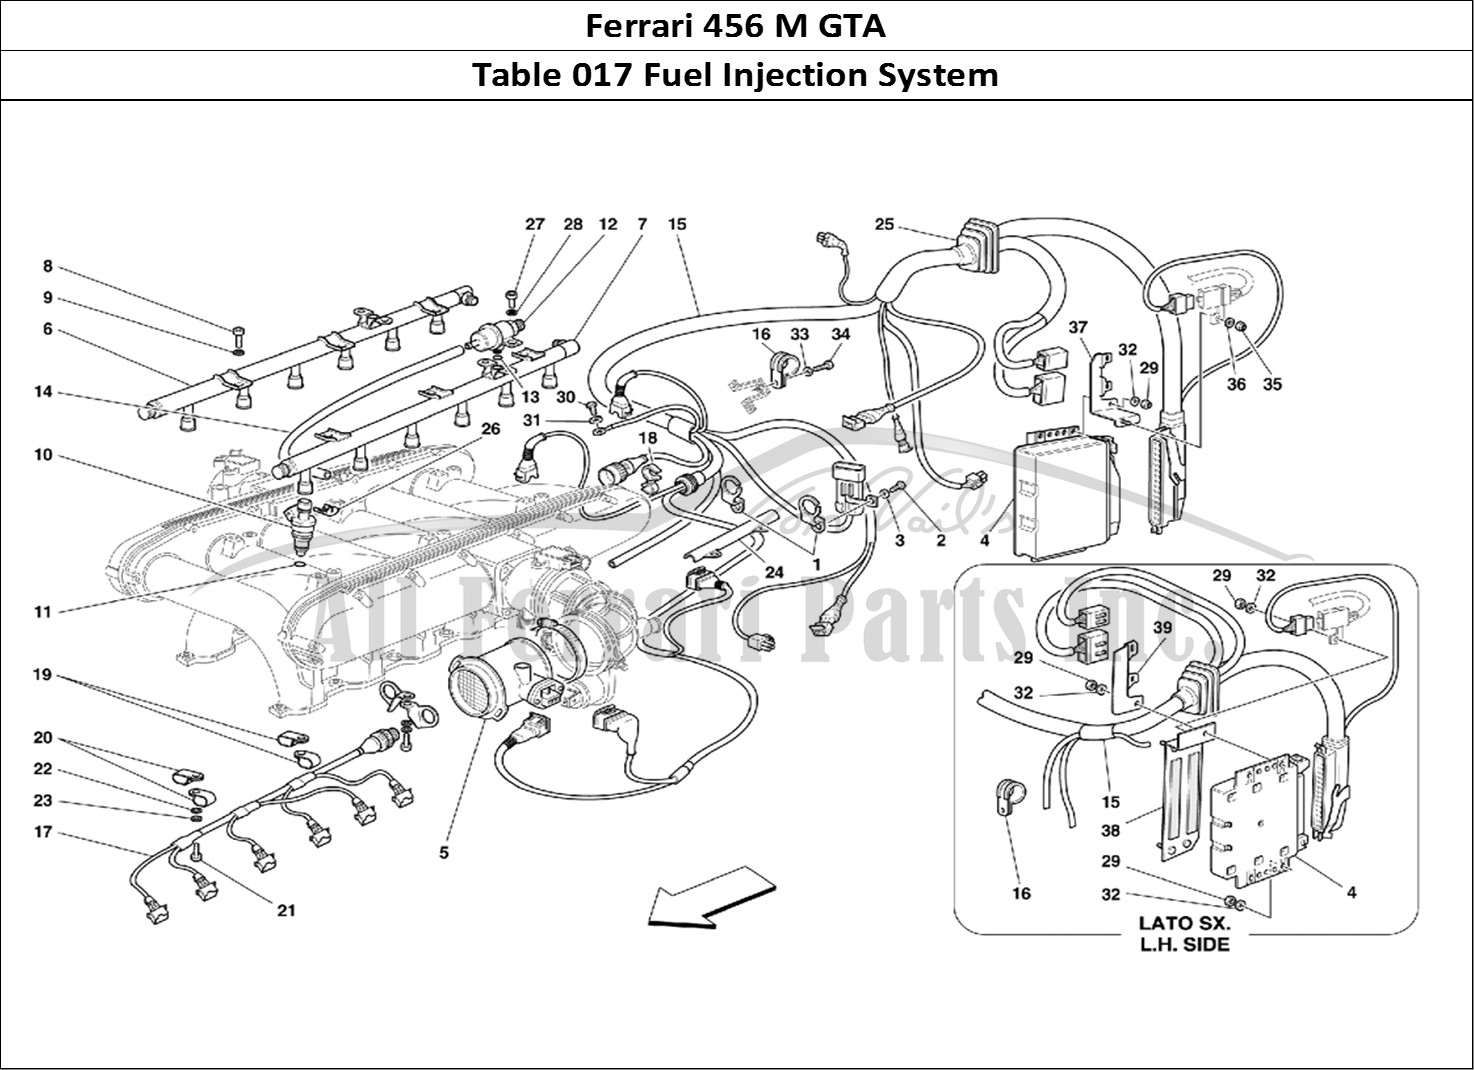 Ferrari Parts Ferrari 456 M GT Page 017 Injection Device